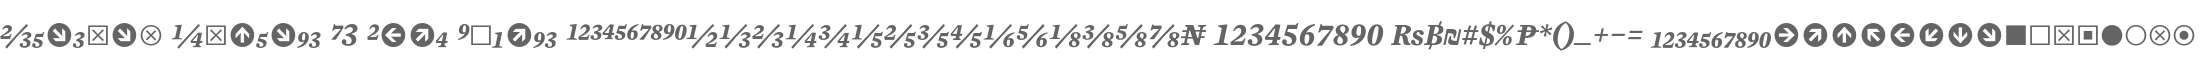 Mercury Numeric G3 Bold Italic